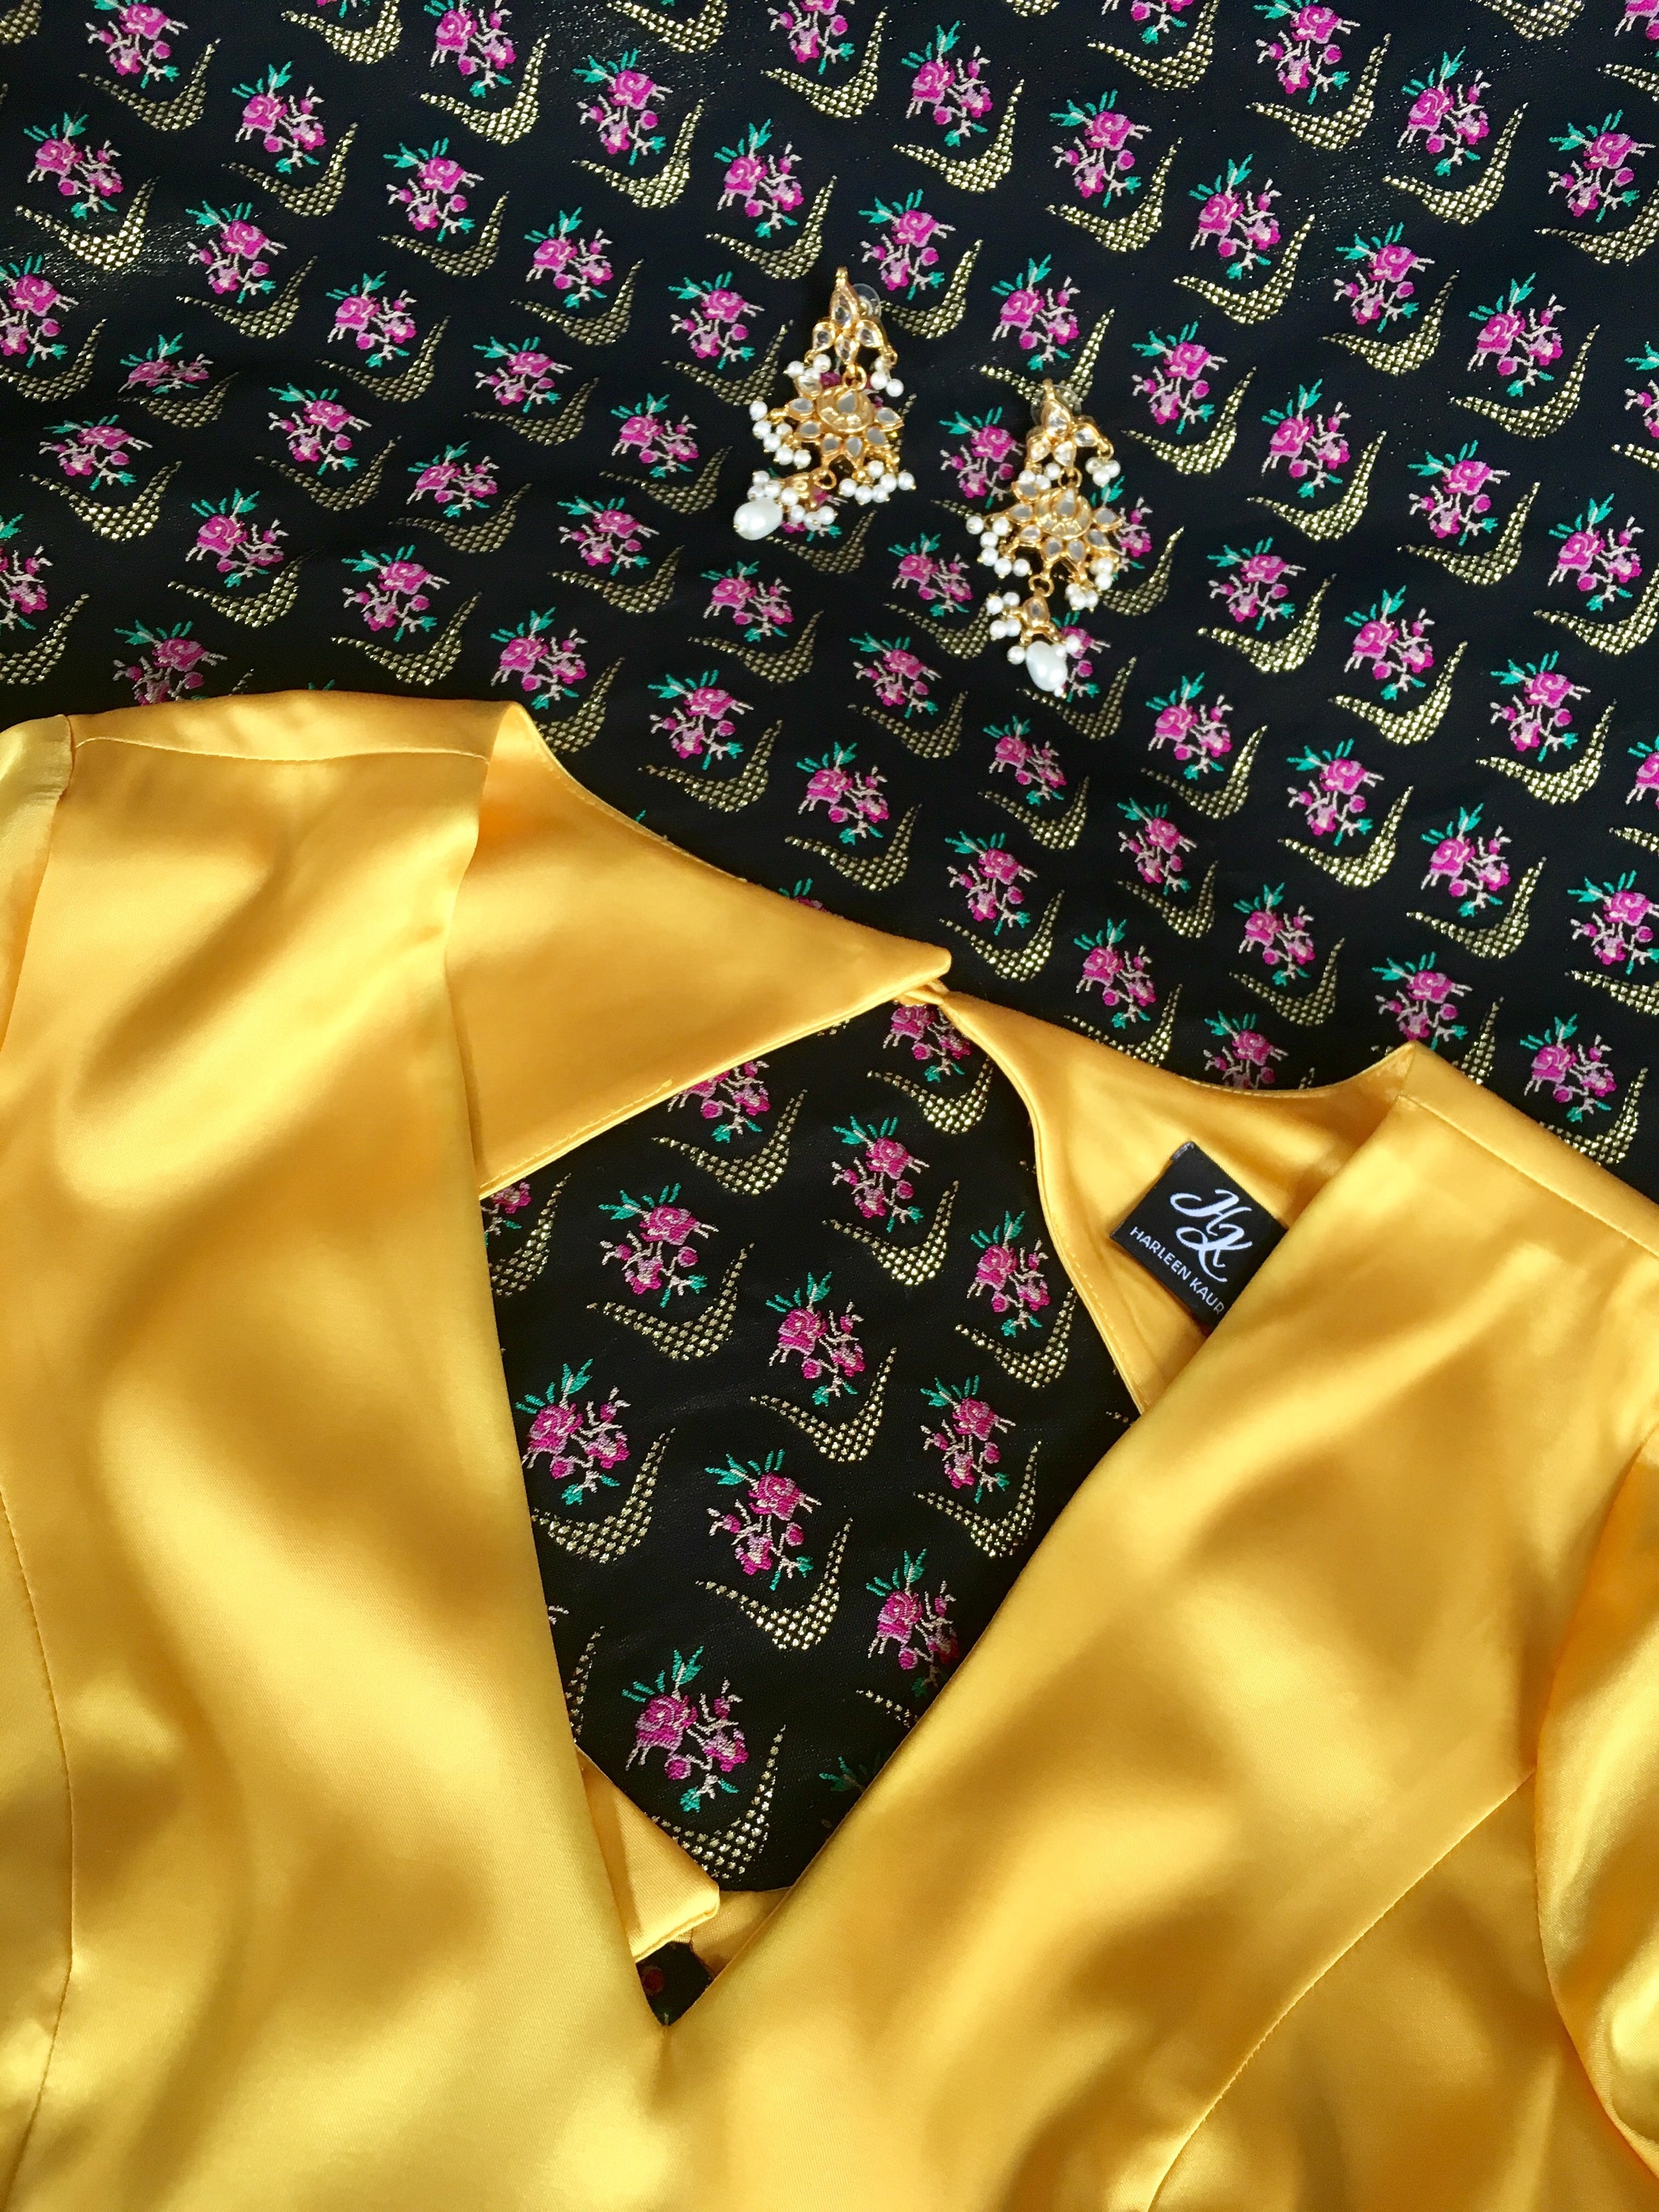 NIDA Diamond Back Satin Top - Detail View - Harleen Kaur - South Asian Womenswear